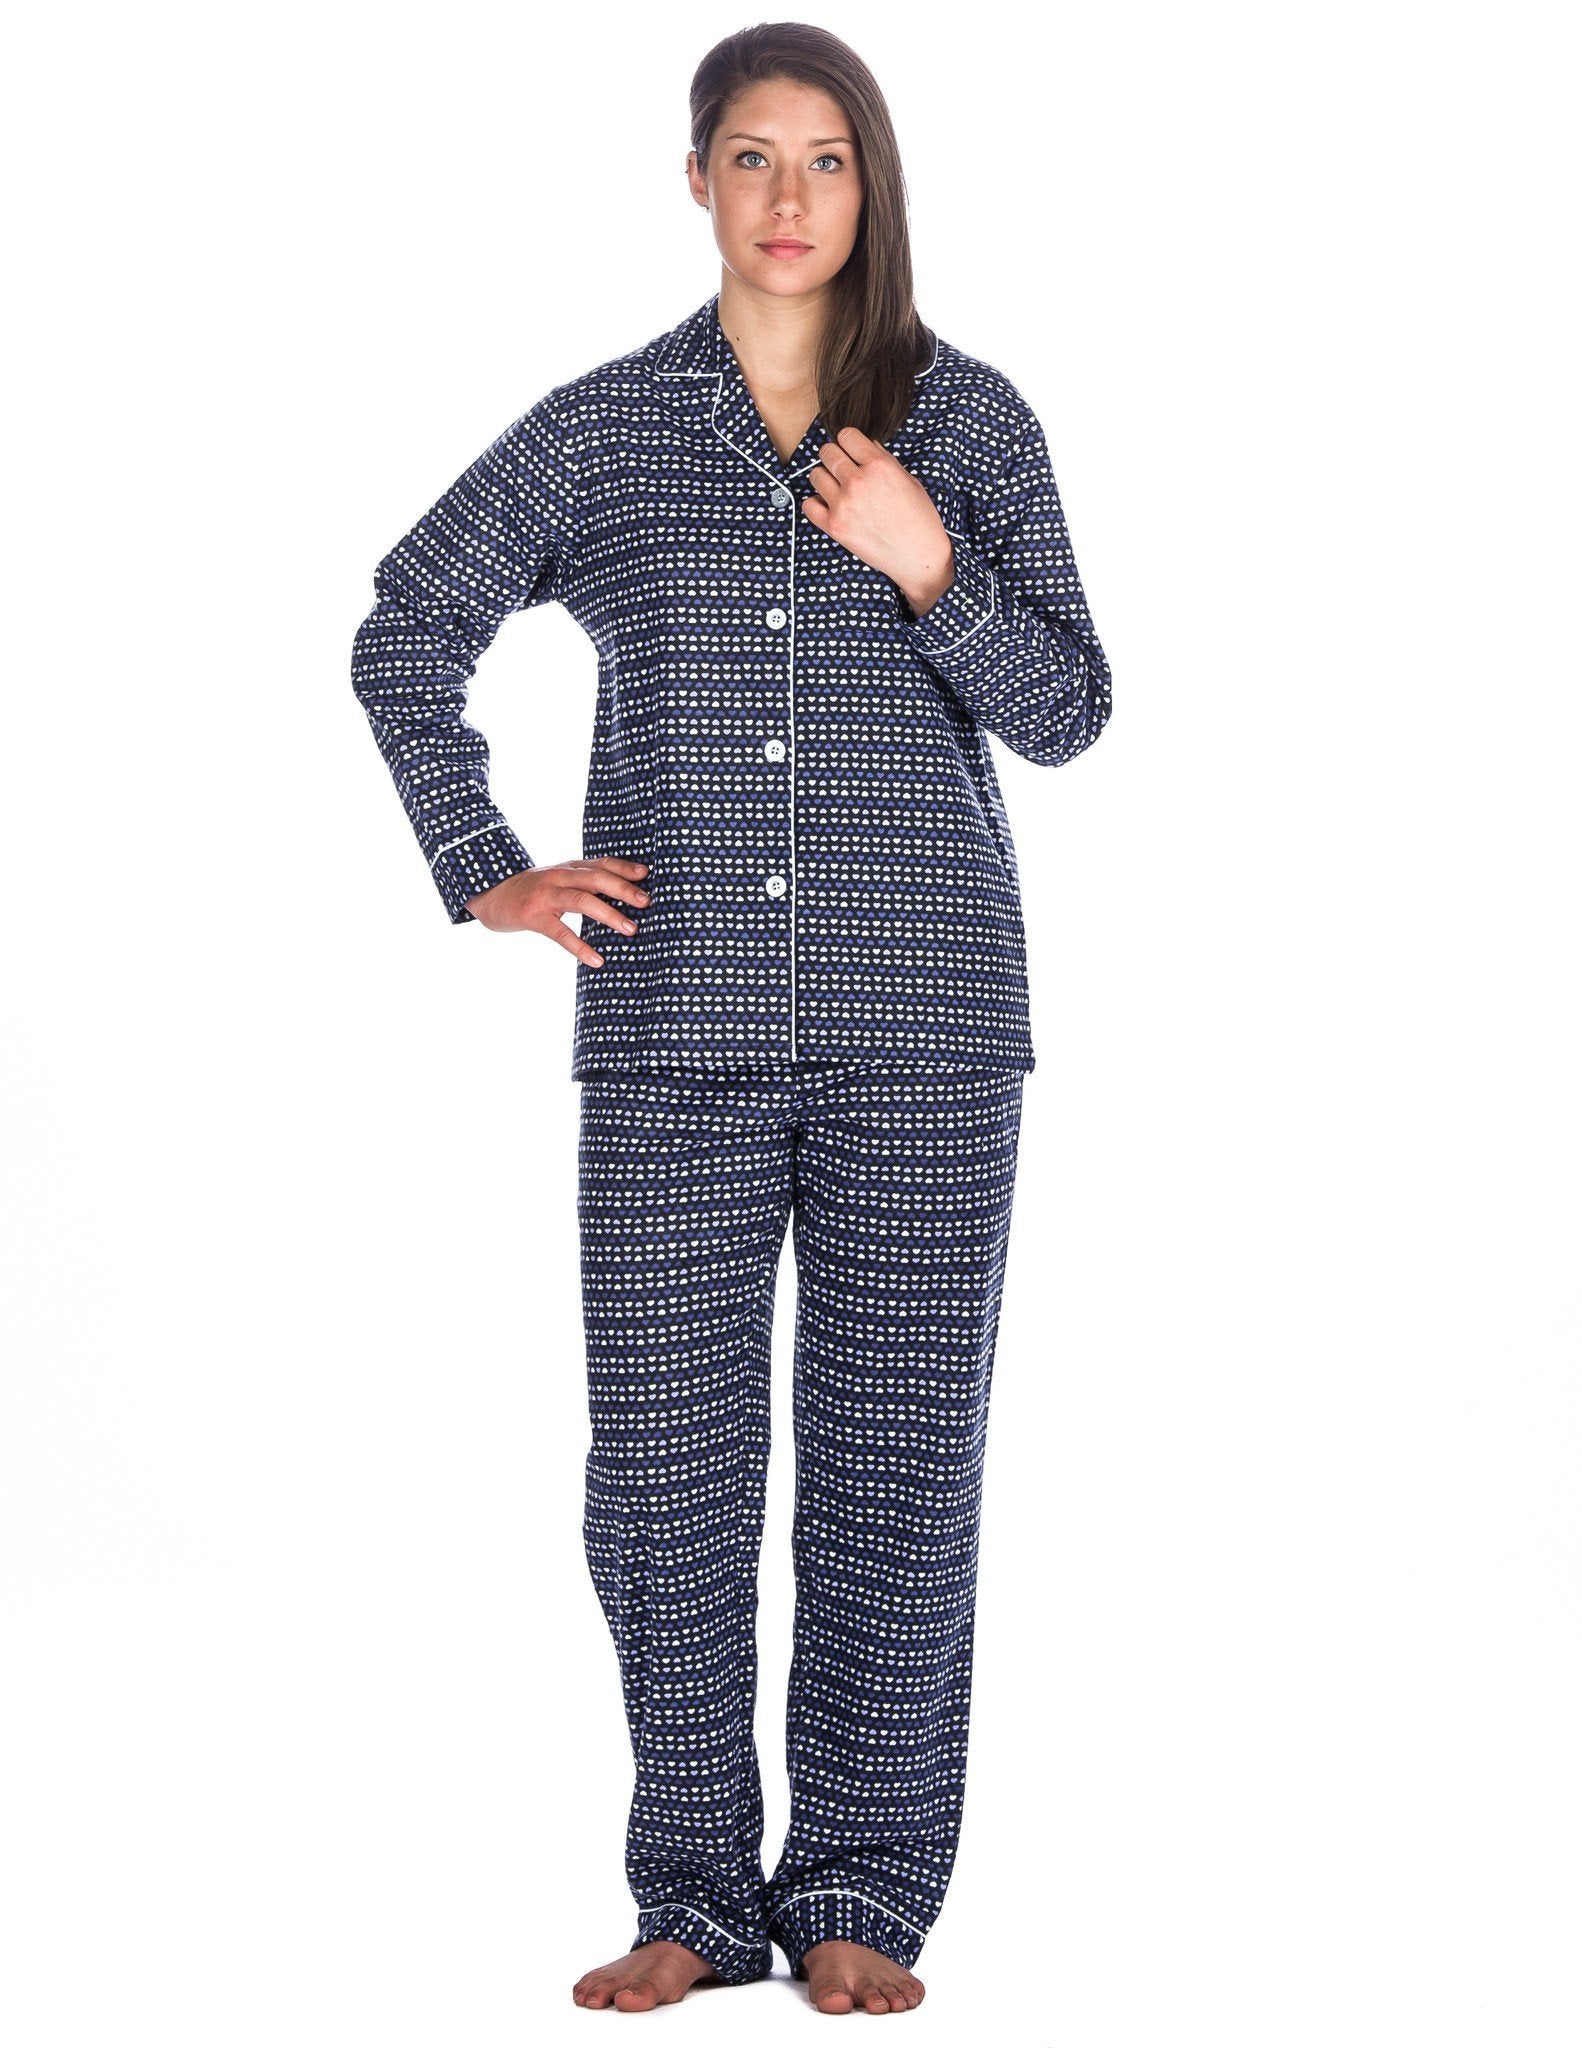 Realxed Fit Womens 100% Cotton Flannel Pajama Sleepwear Set - Hearts Blue